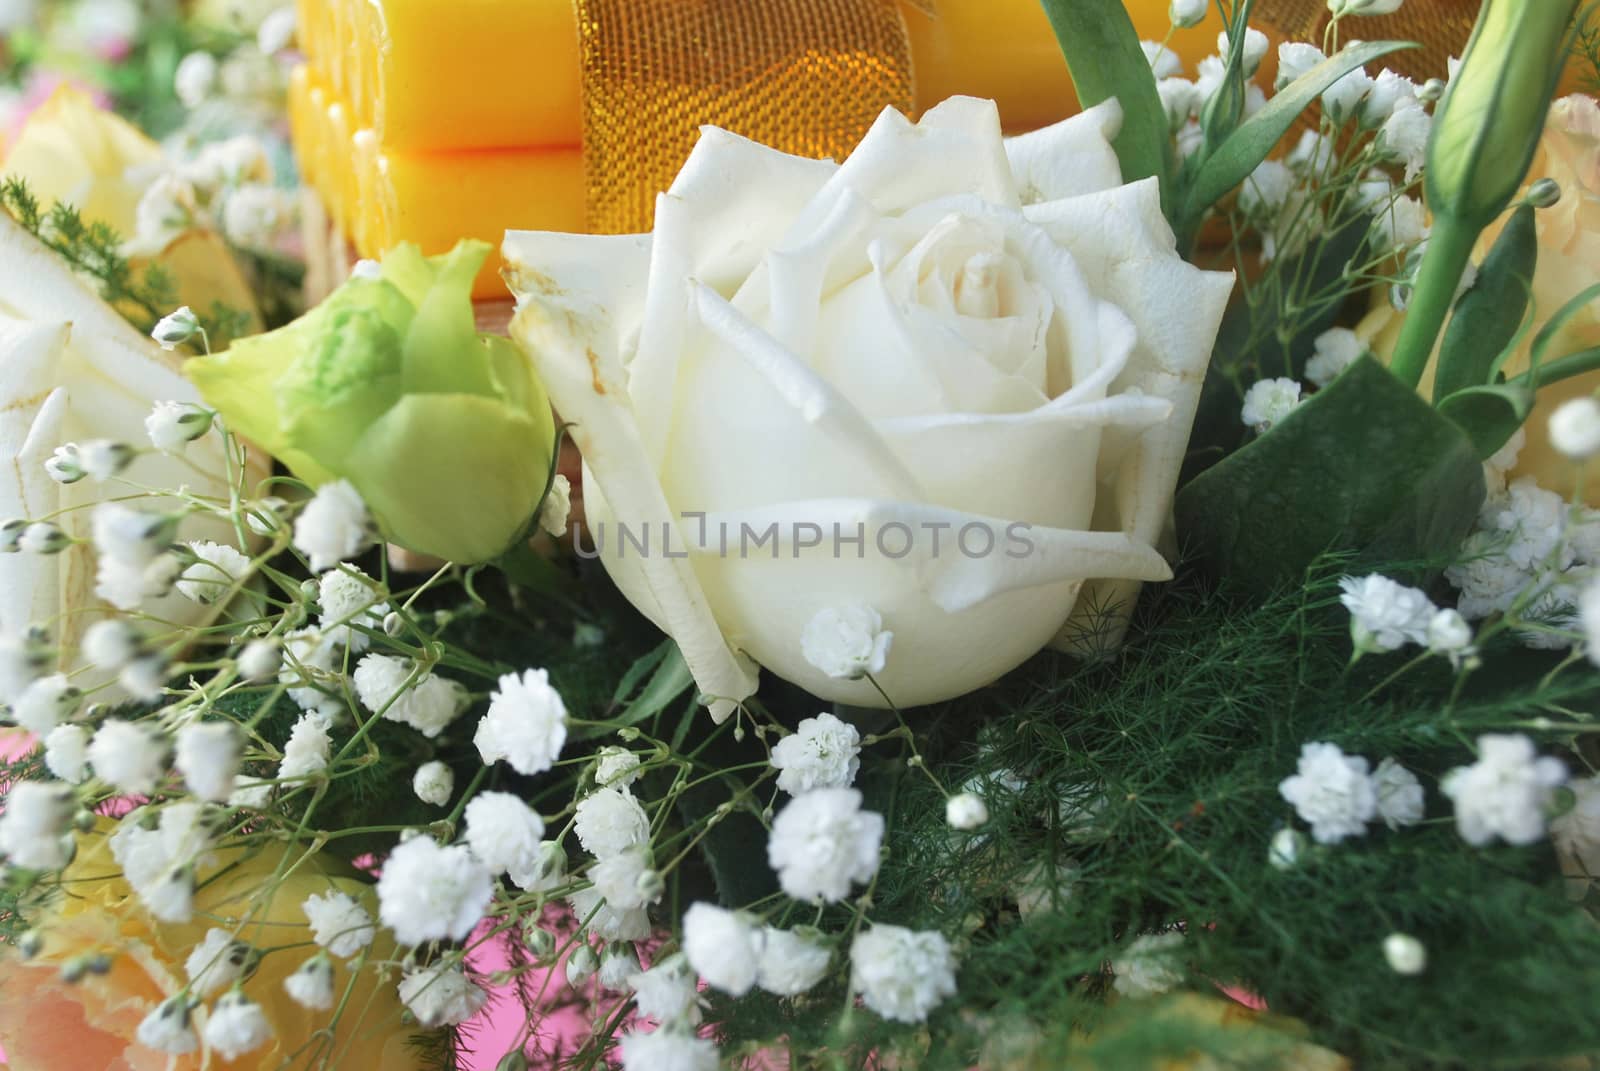 Flower arrangement in the wedding has roses.